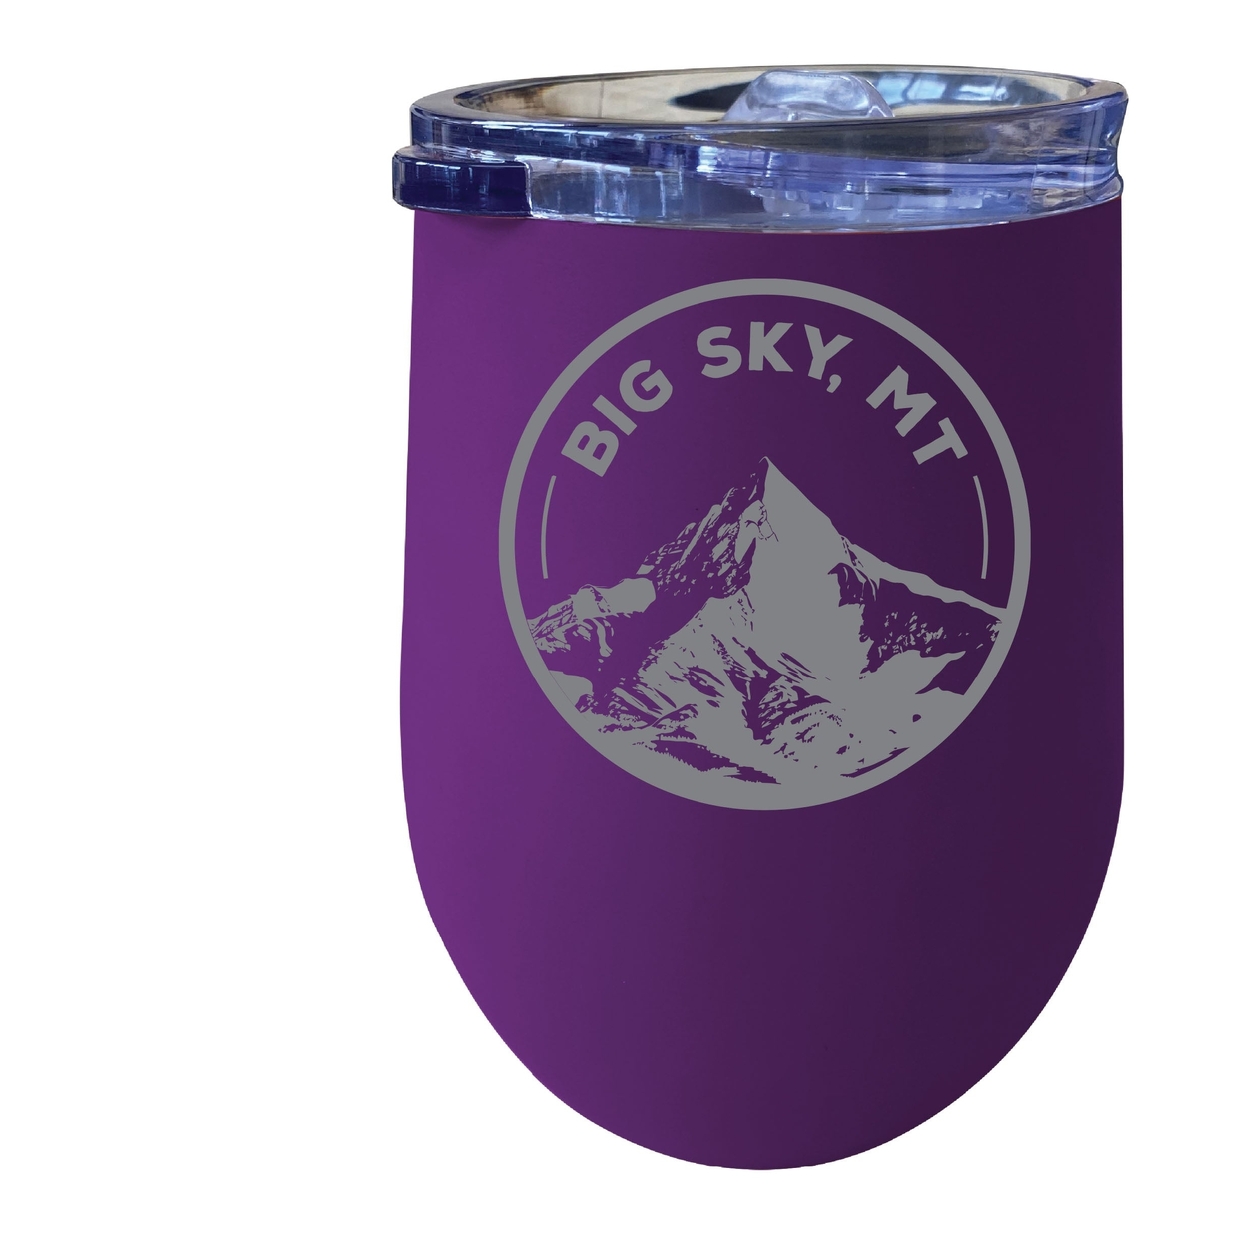 Big Sky Montana Souvenir 12 Oz Engraved Insulated Wine Stainless Steel Tumbler - Purple,,Single Unit